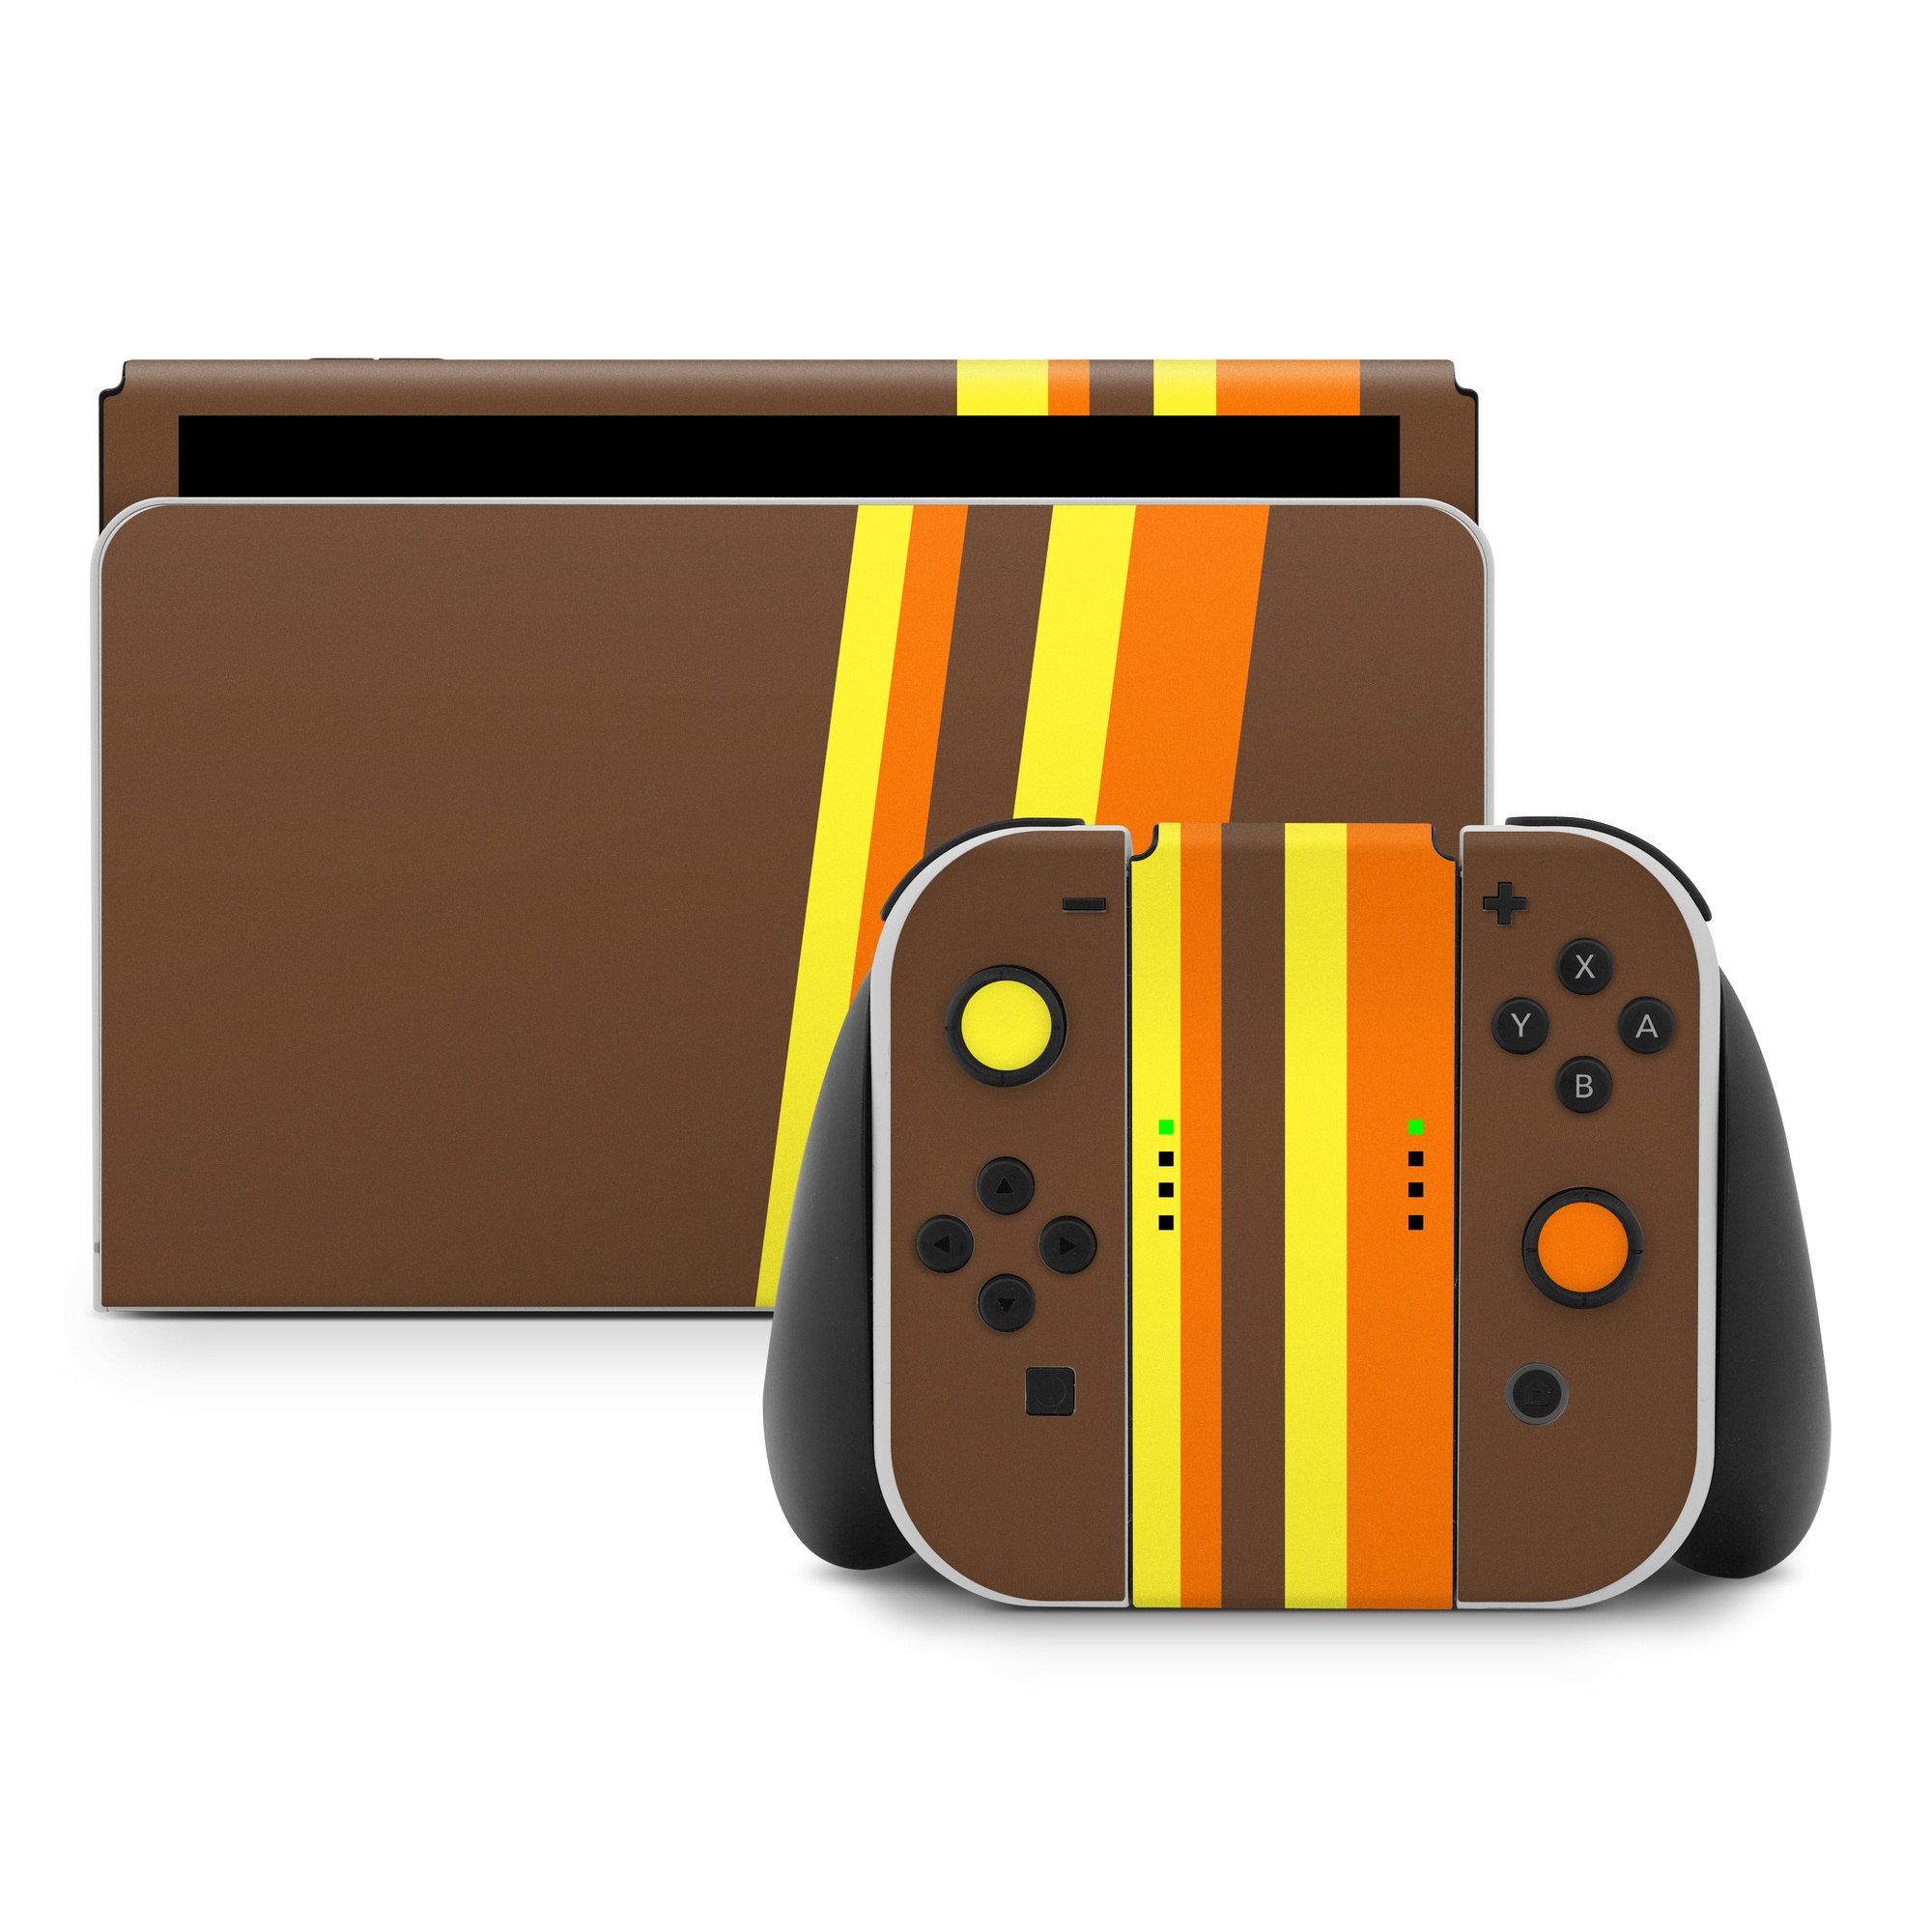 Nintendo Switch Skin - Oahu (Image 1)